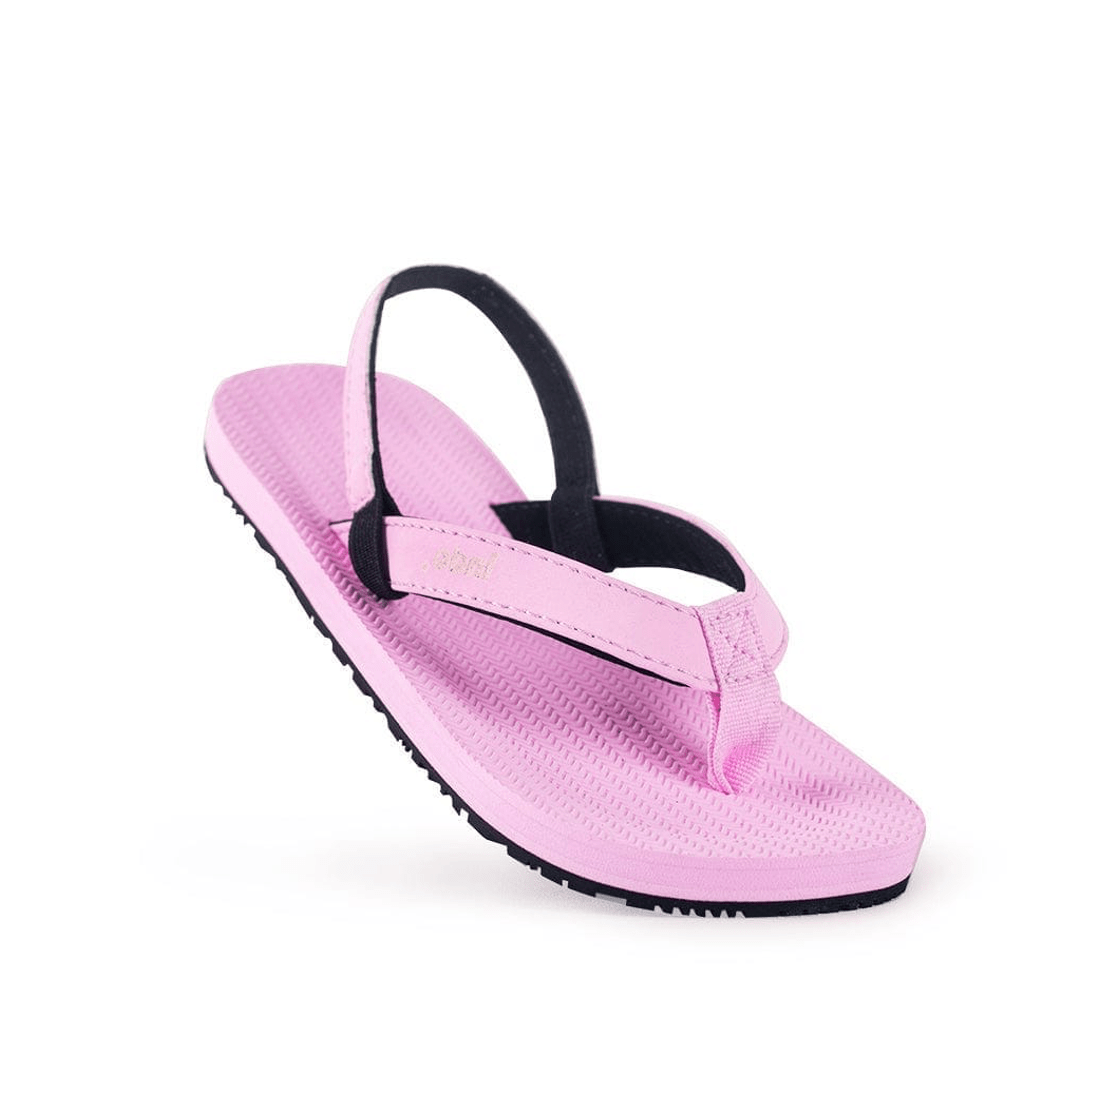 Toddlers Flip Flops - Pink